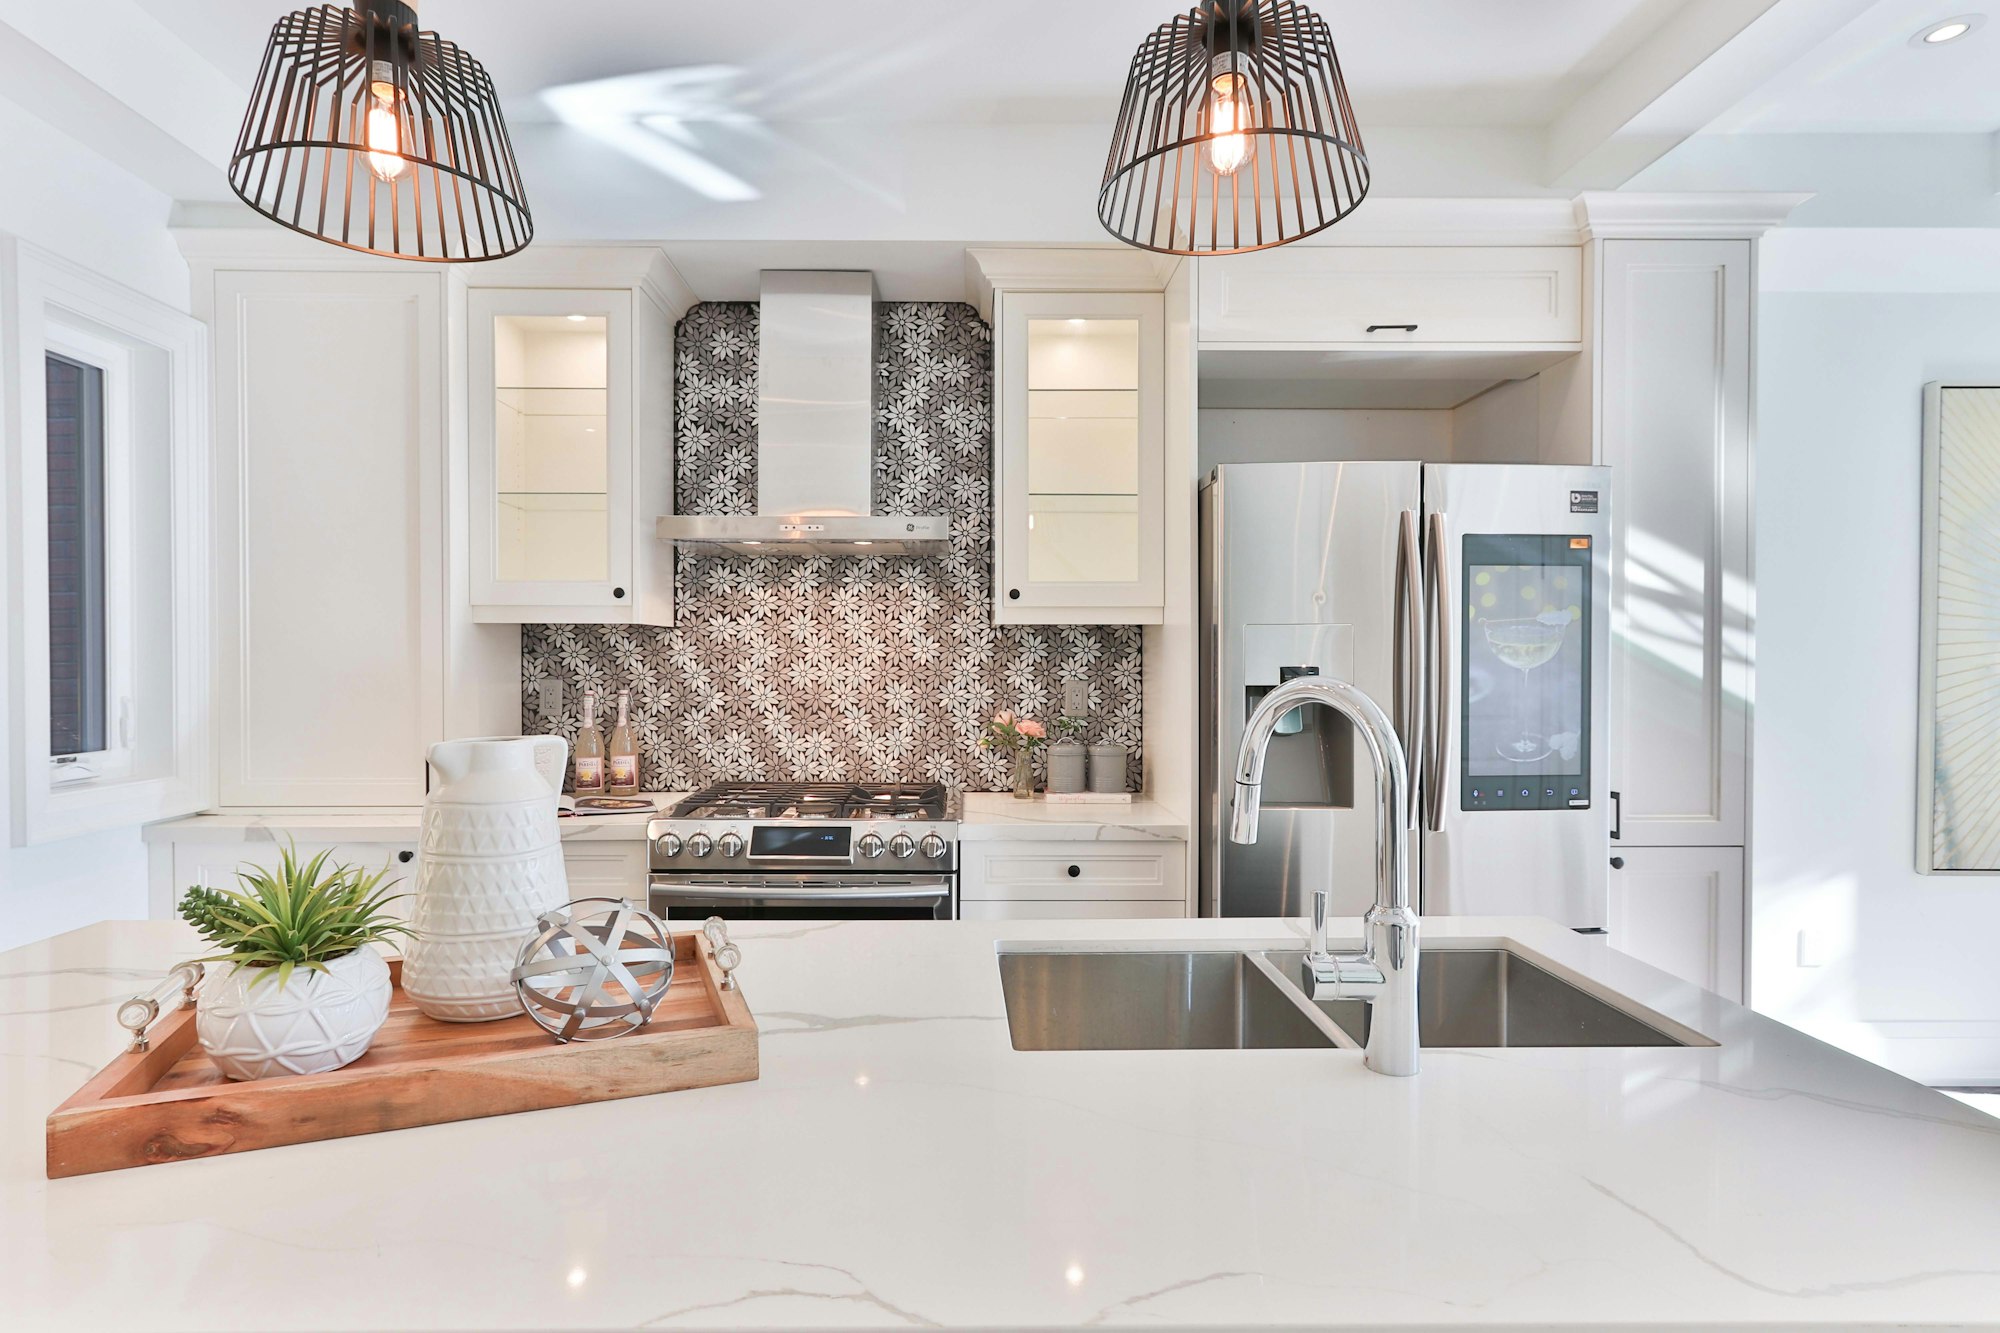 White kitchen with black and white mosaic backsplash